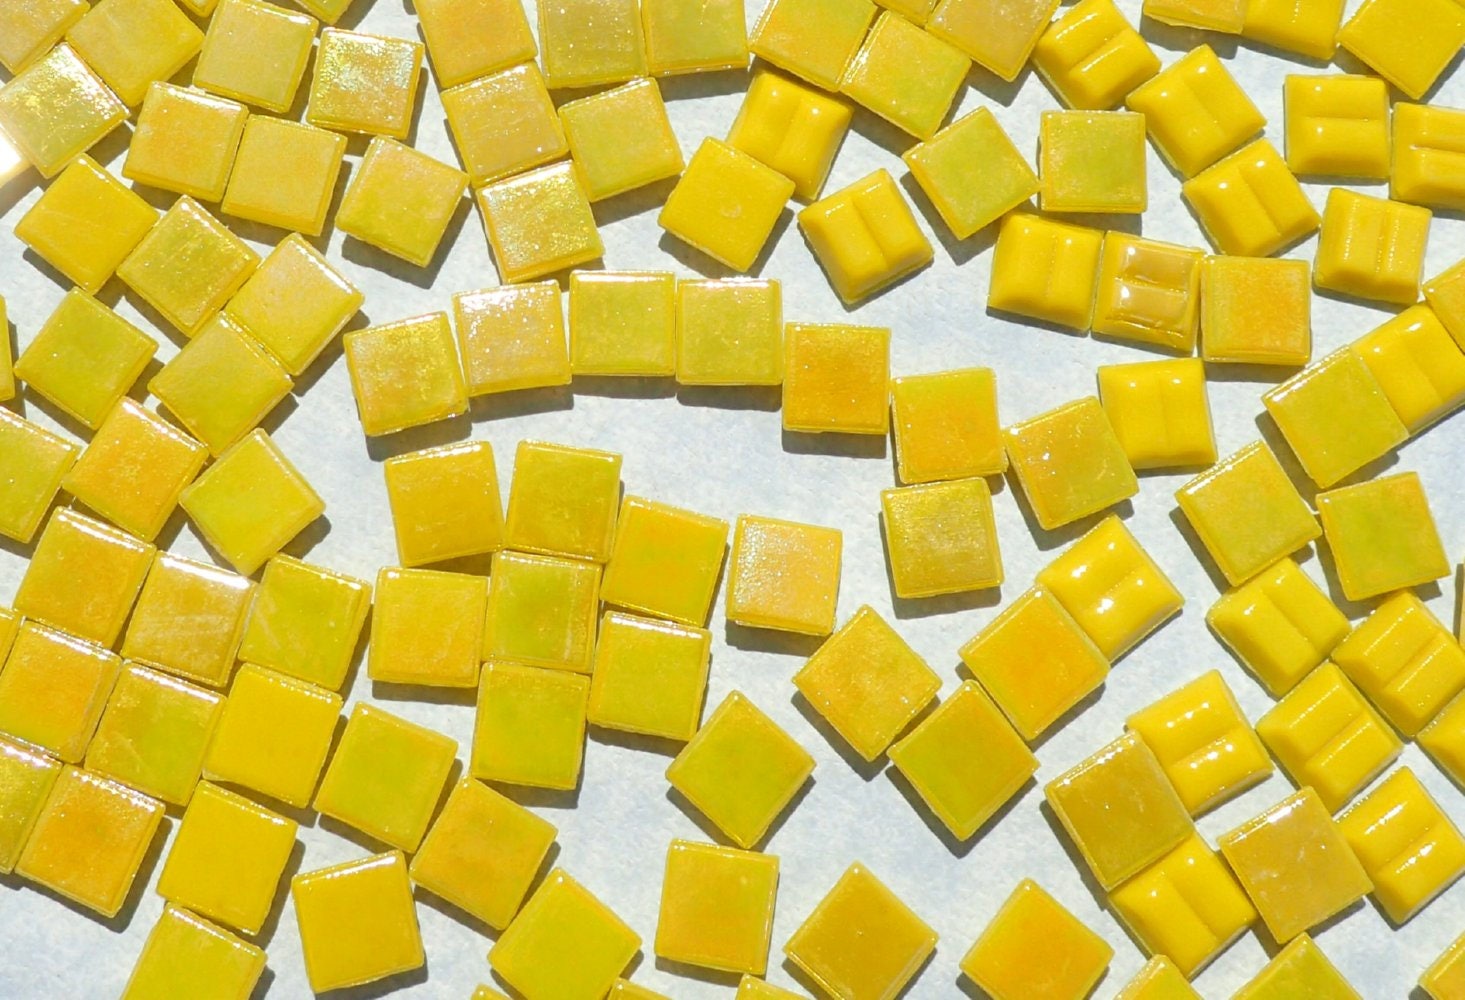 Lemon Yellow Iridescent Venetian Glass Tiles - 1 cm - Approx 3/8 inch - Mosaic Tiles - 100 grams